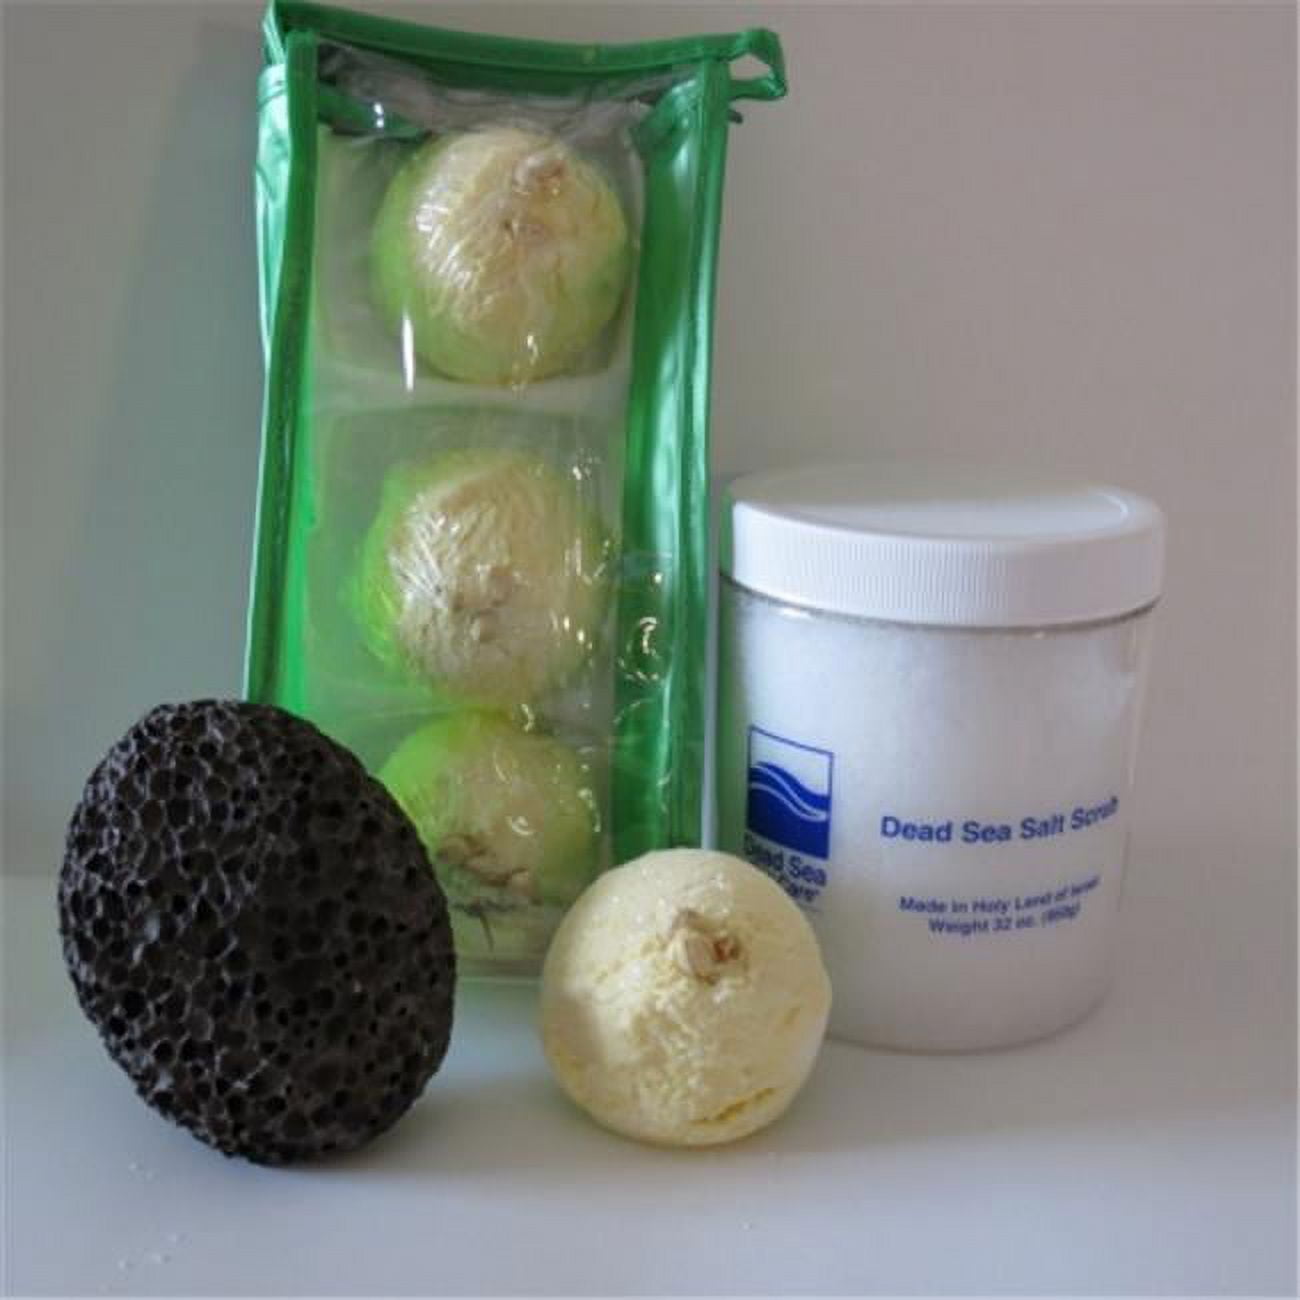 DeadSea-BBTCocL05 3 Pack Coconut Lime Bubble Bath Truffles, 32 oz Cucumber & Melon Dry Salt Scrub & Pumice Stone -  Dead Sea Spa Care, DeadSea_BBTCocL05